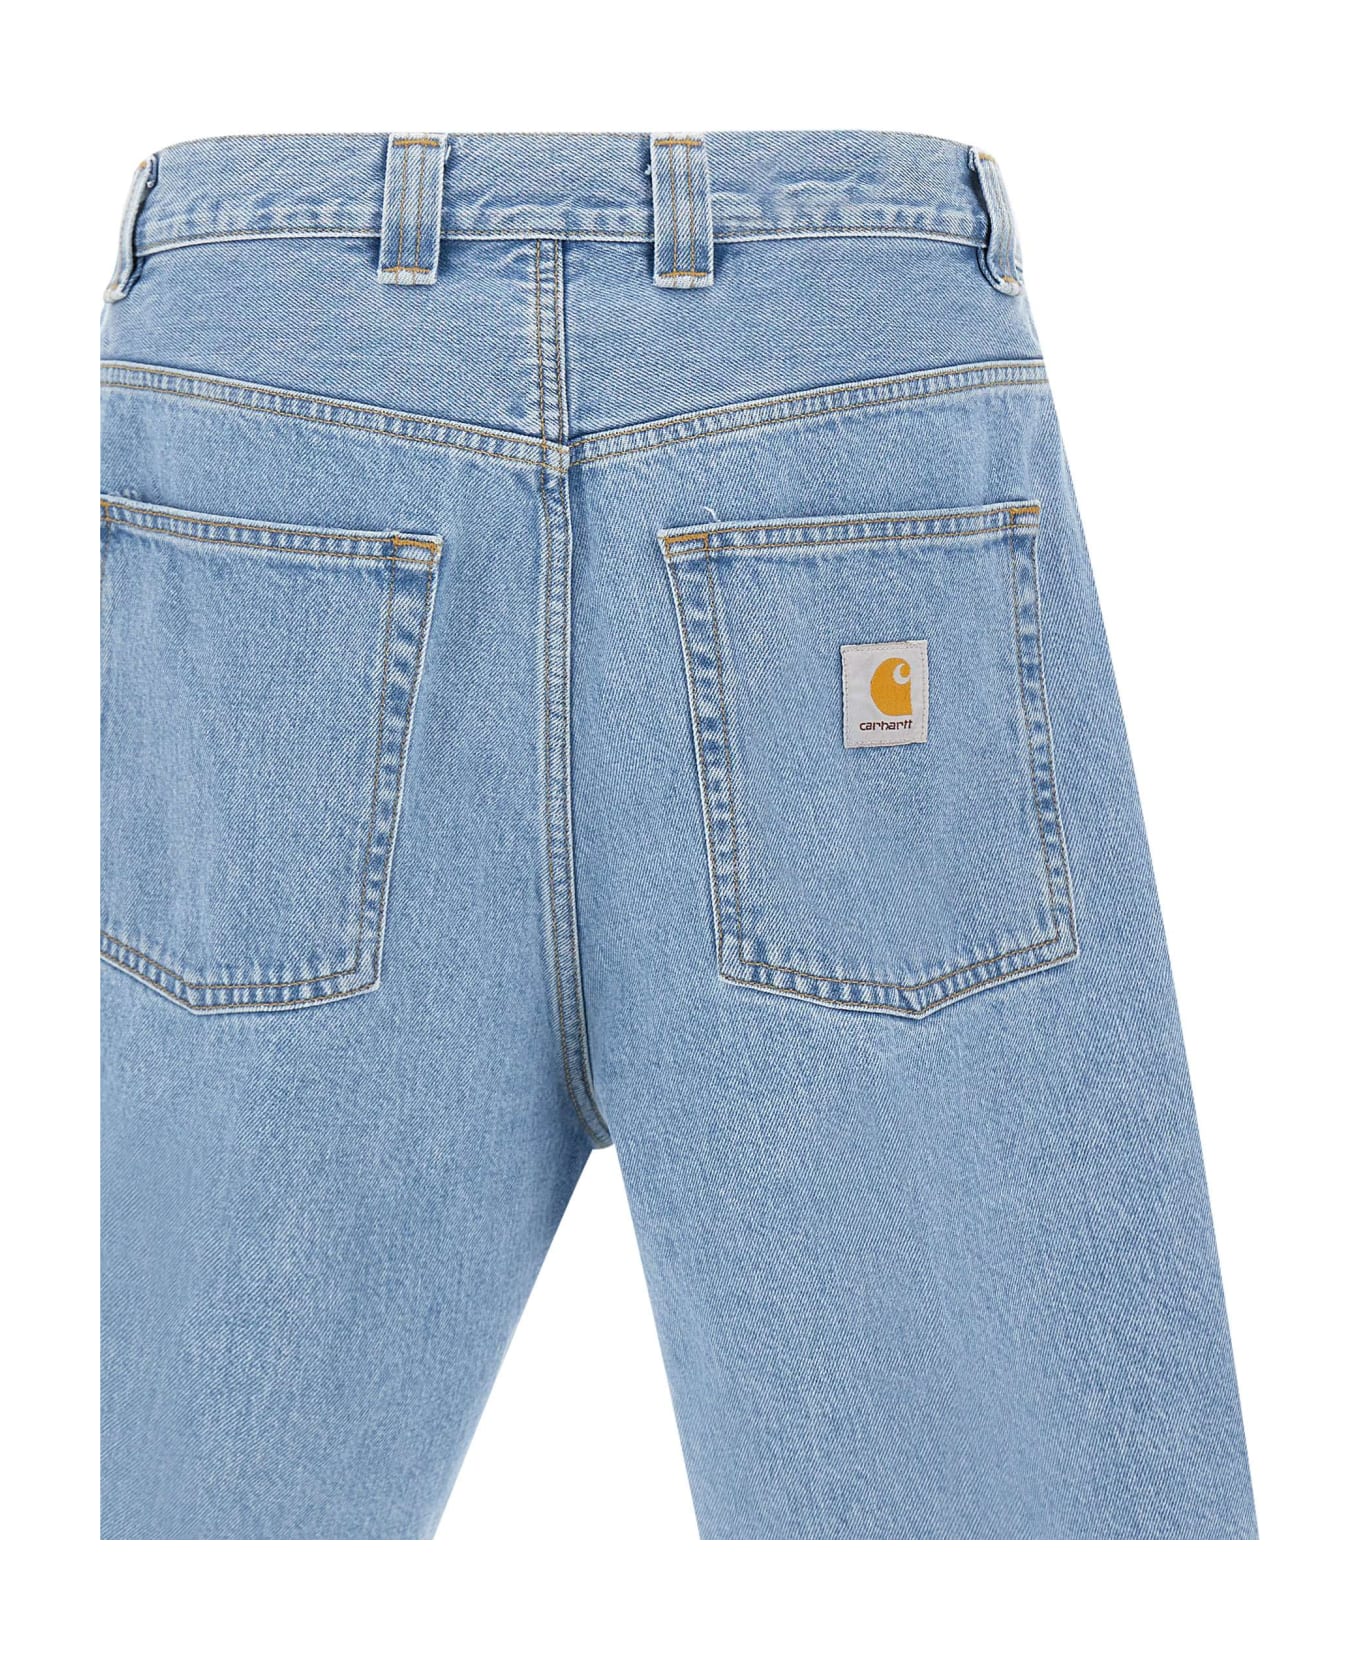 Carhartt 'landon Short' Shorts - Stone Washed ショートパンツ